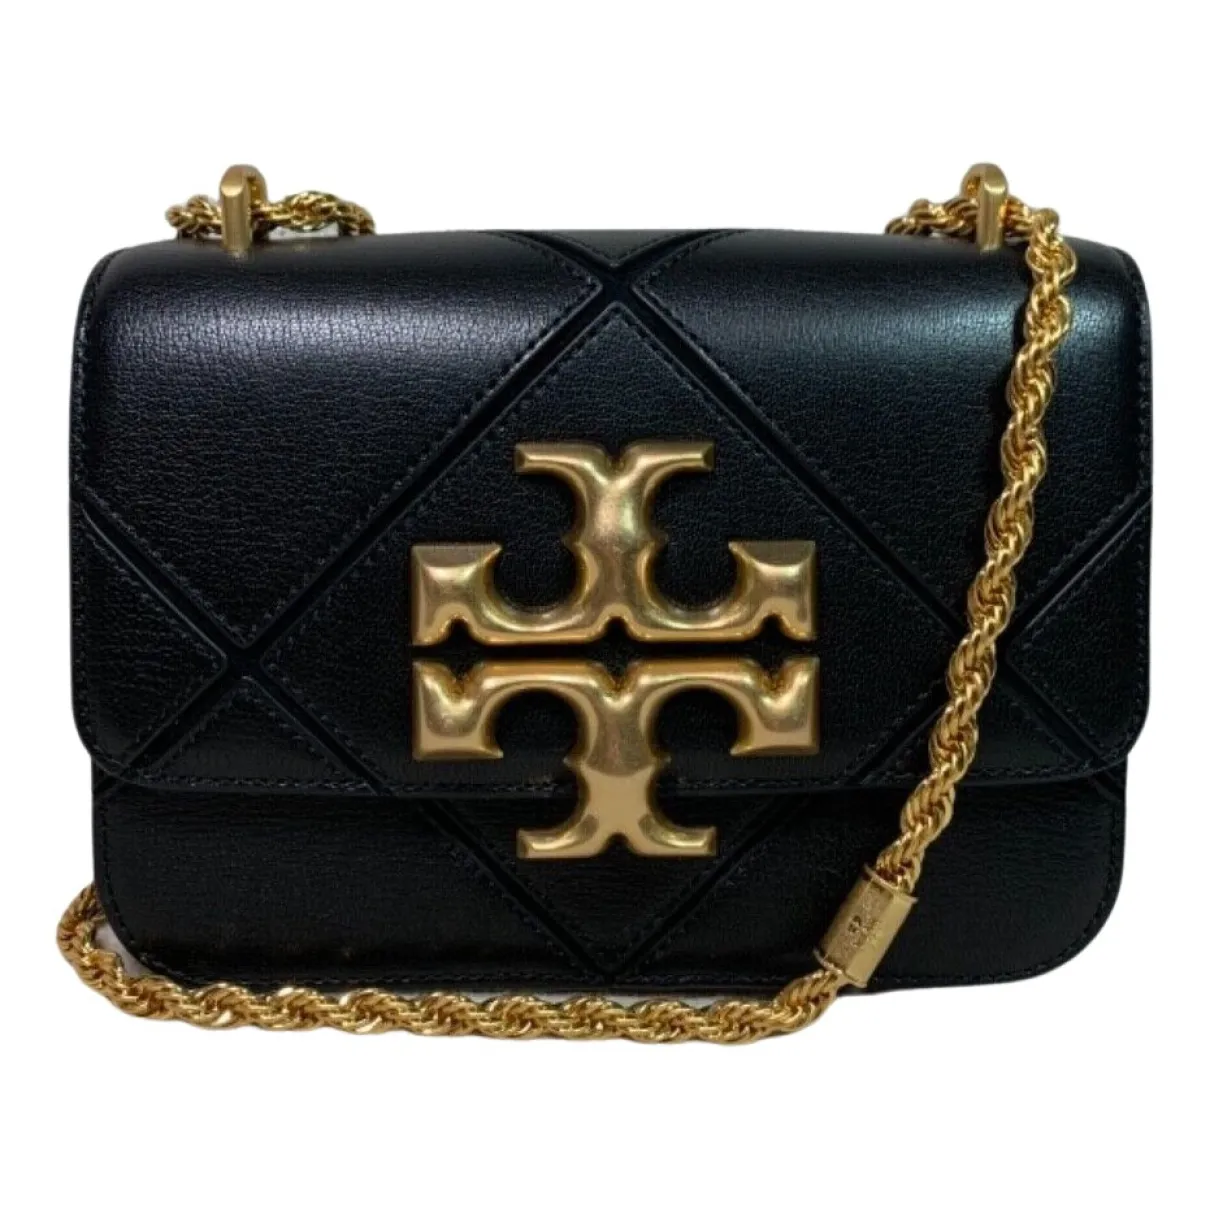 Leather handbag Tory Burch Black in Leather - 31531886